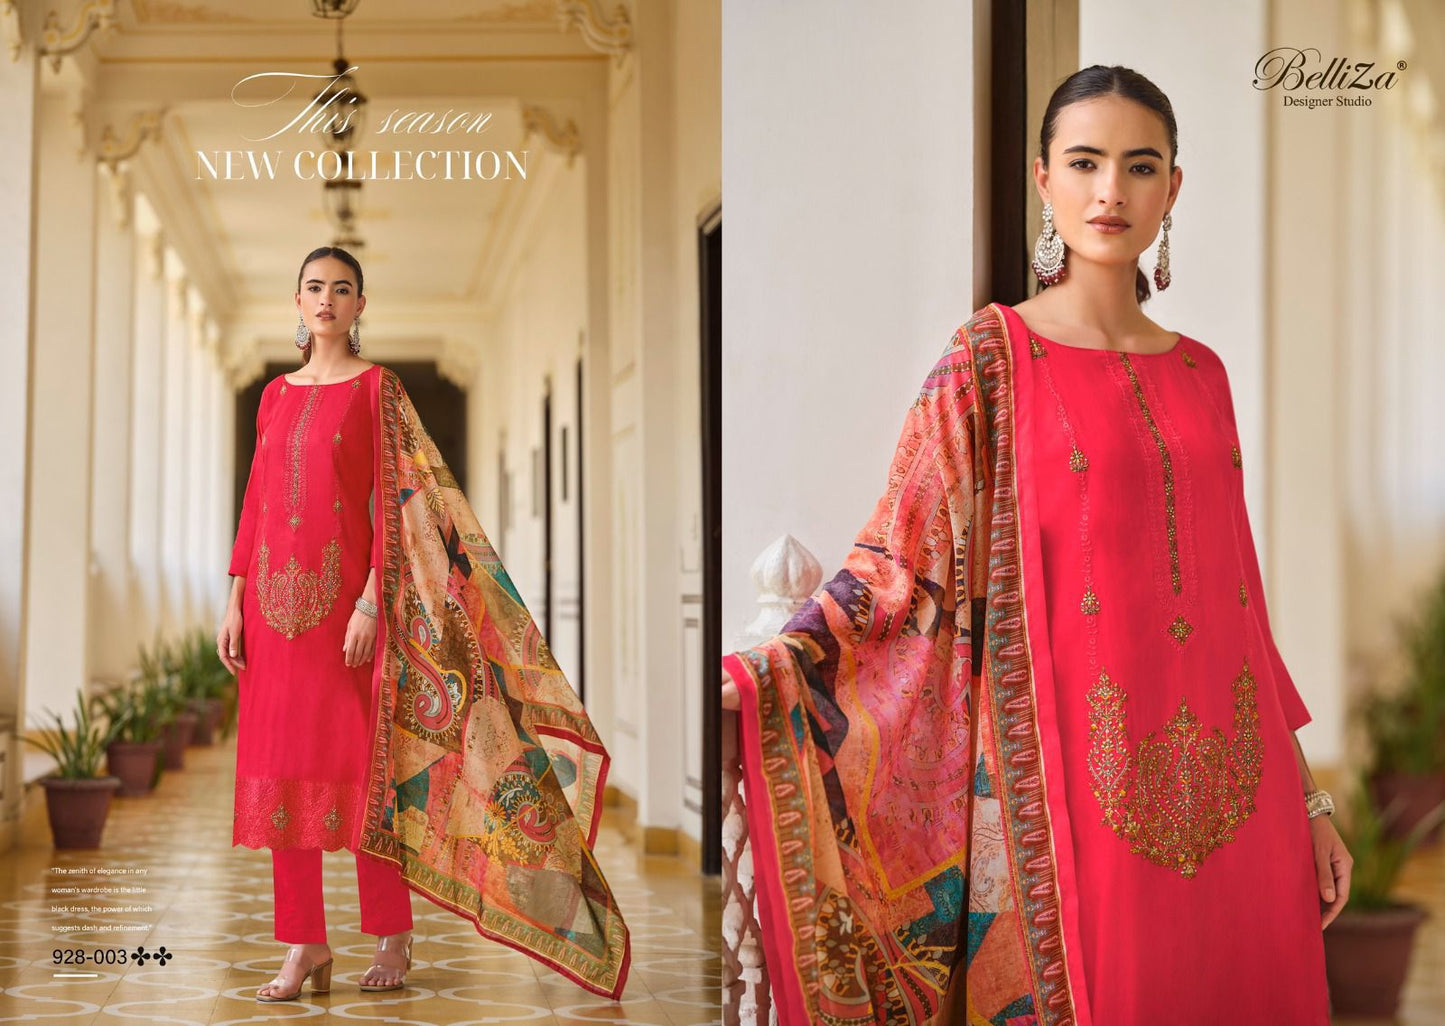 Jashn E Ishq Vol 9 Belliza Designer Studio Heavy Jaam Karachi Salwar Suits Manufacturer